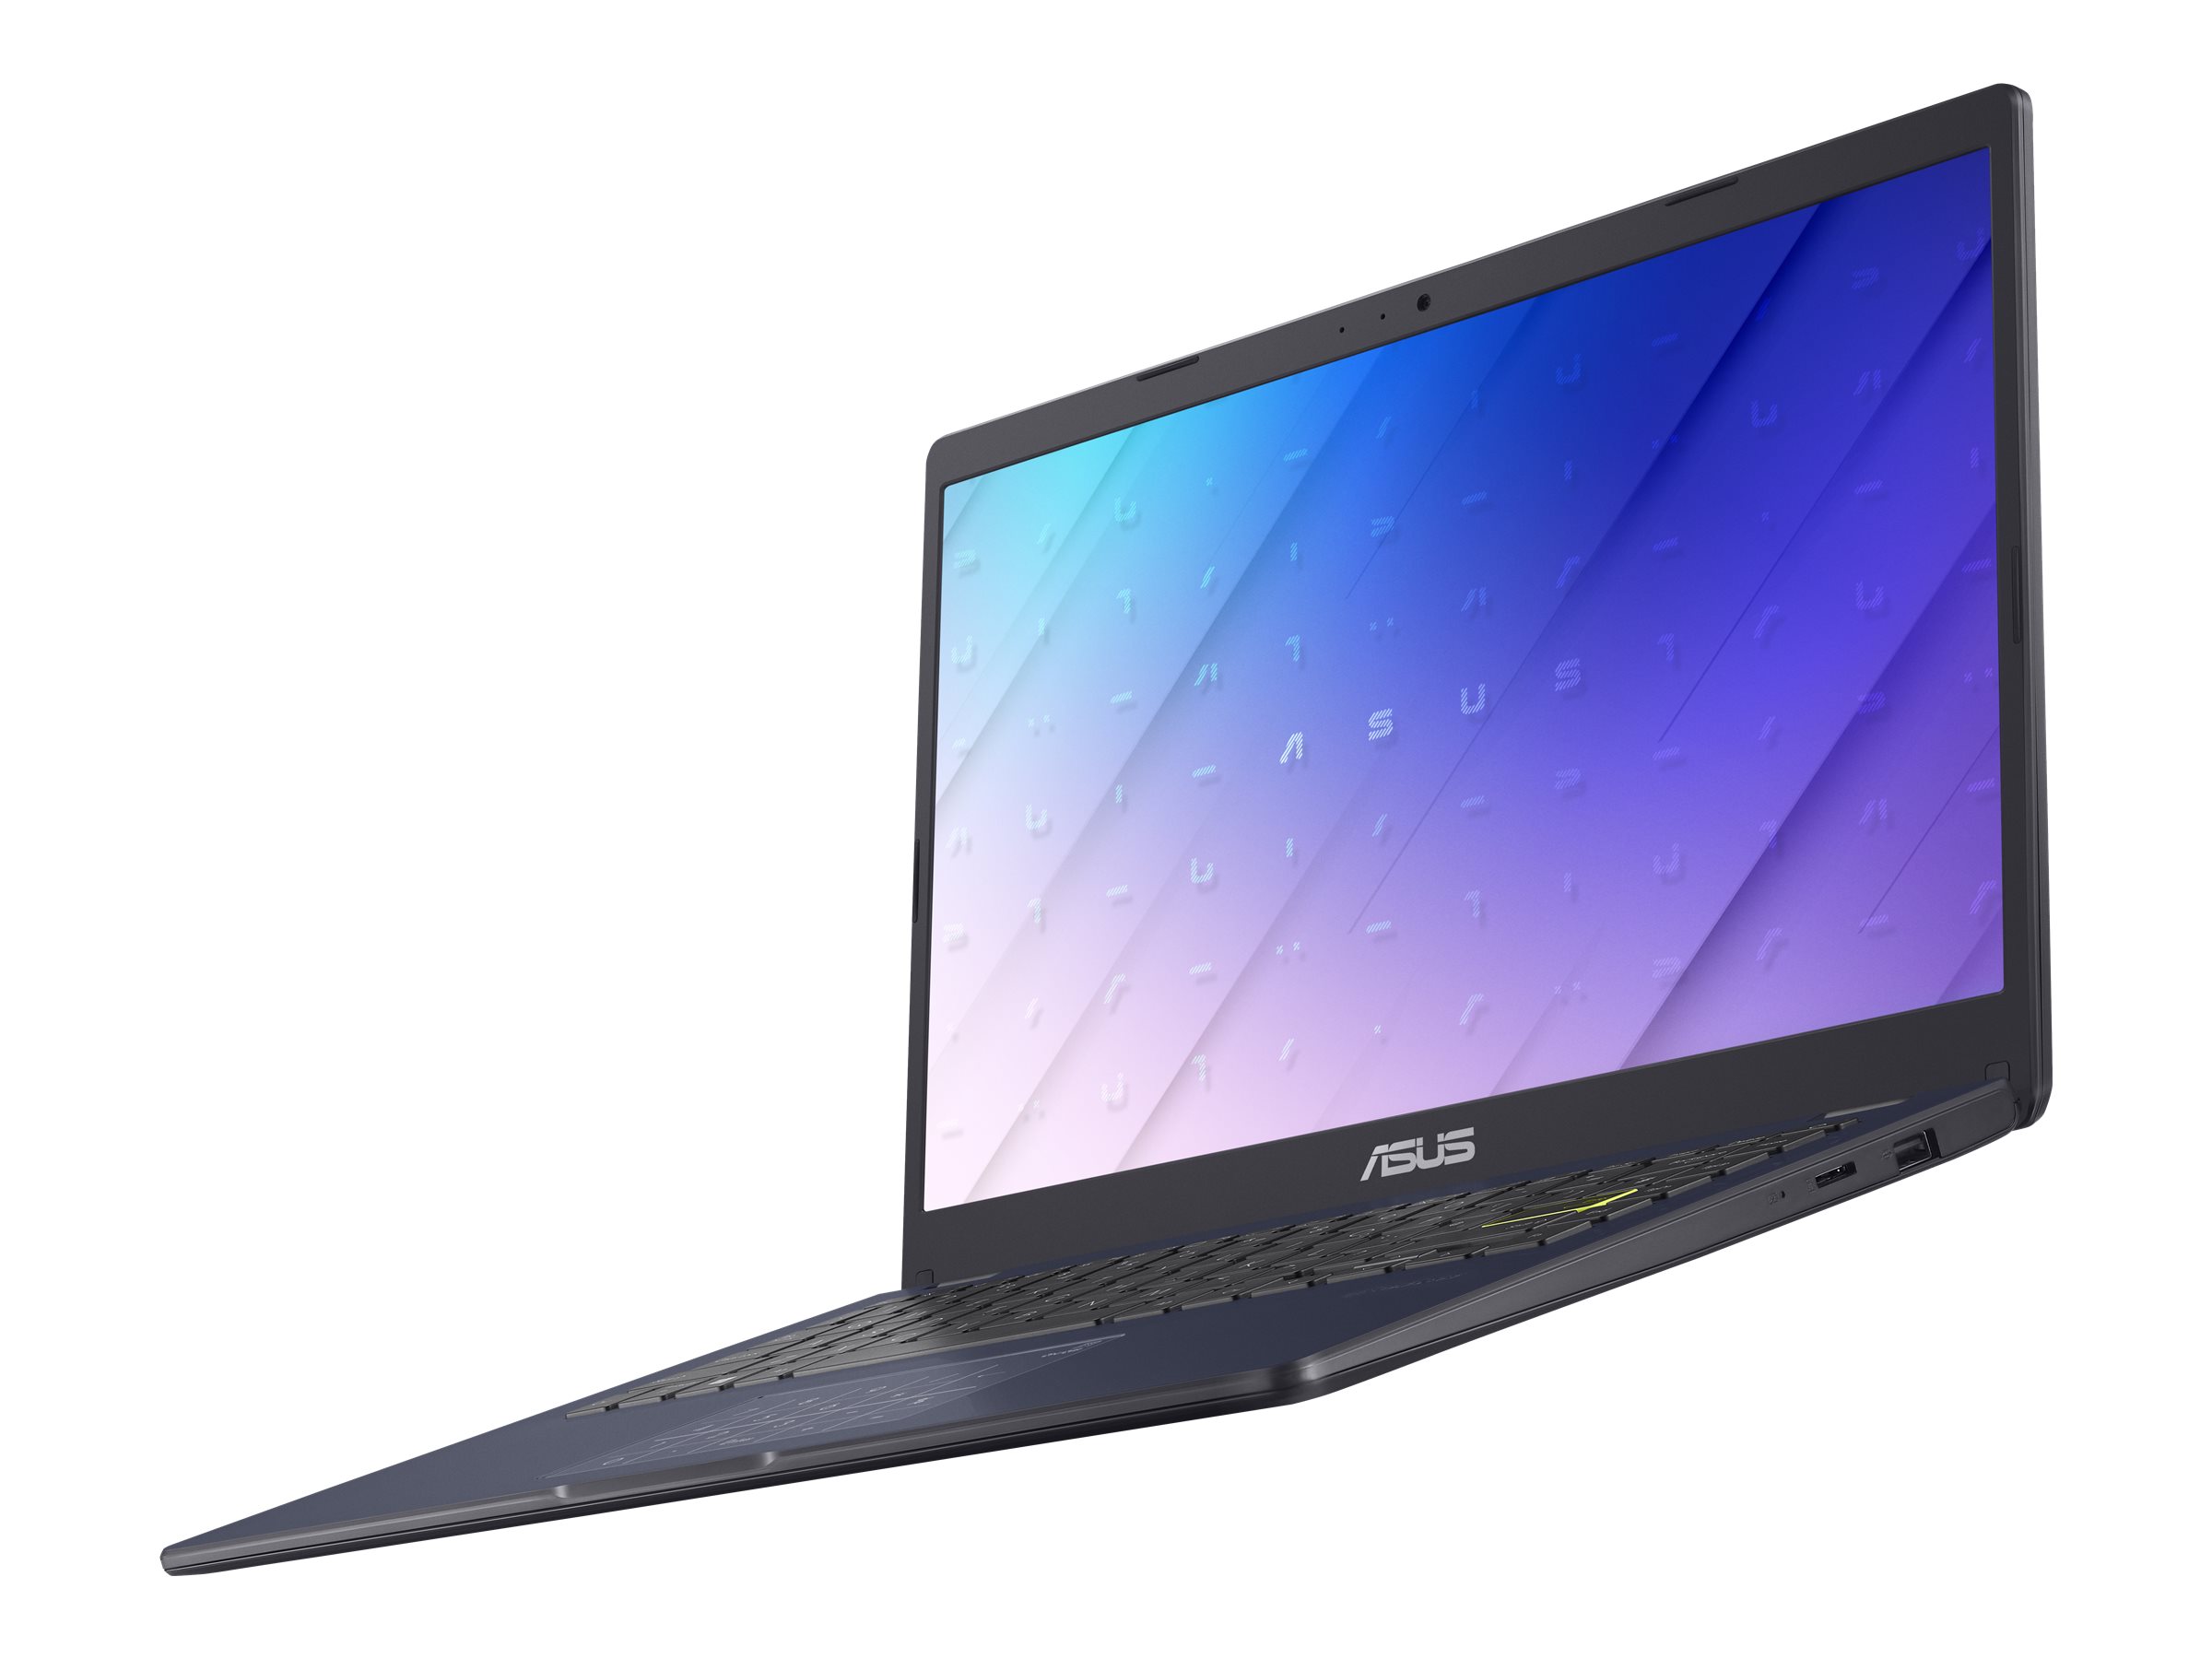 Asus 14" Full HD Laptop, Intel Celeron N4020, 4GB RAM, 64GB SSD, Windows 10 Home, Star Black, L410MA-DB02 - image 2 of 13